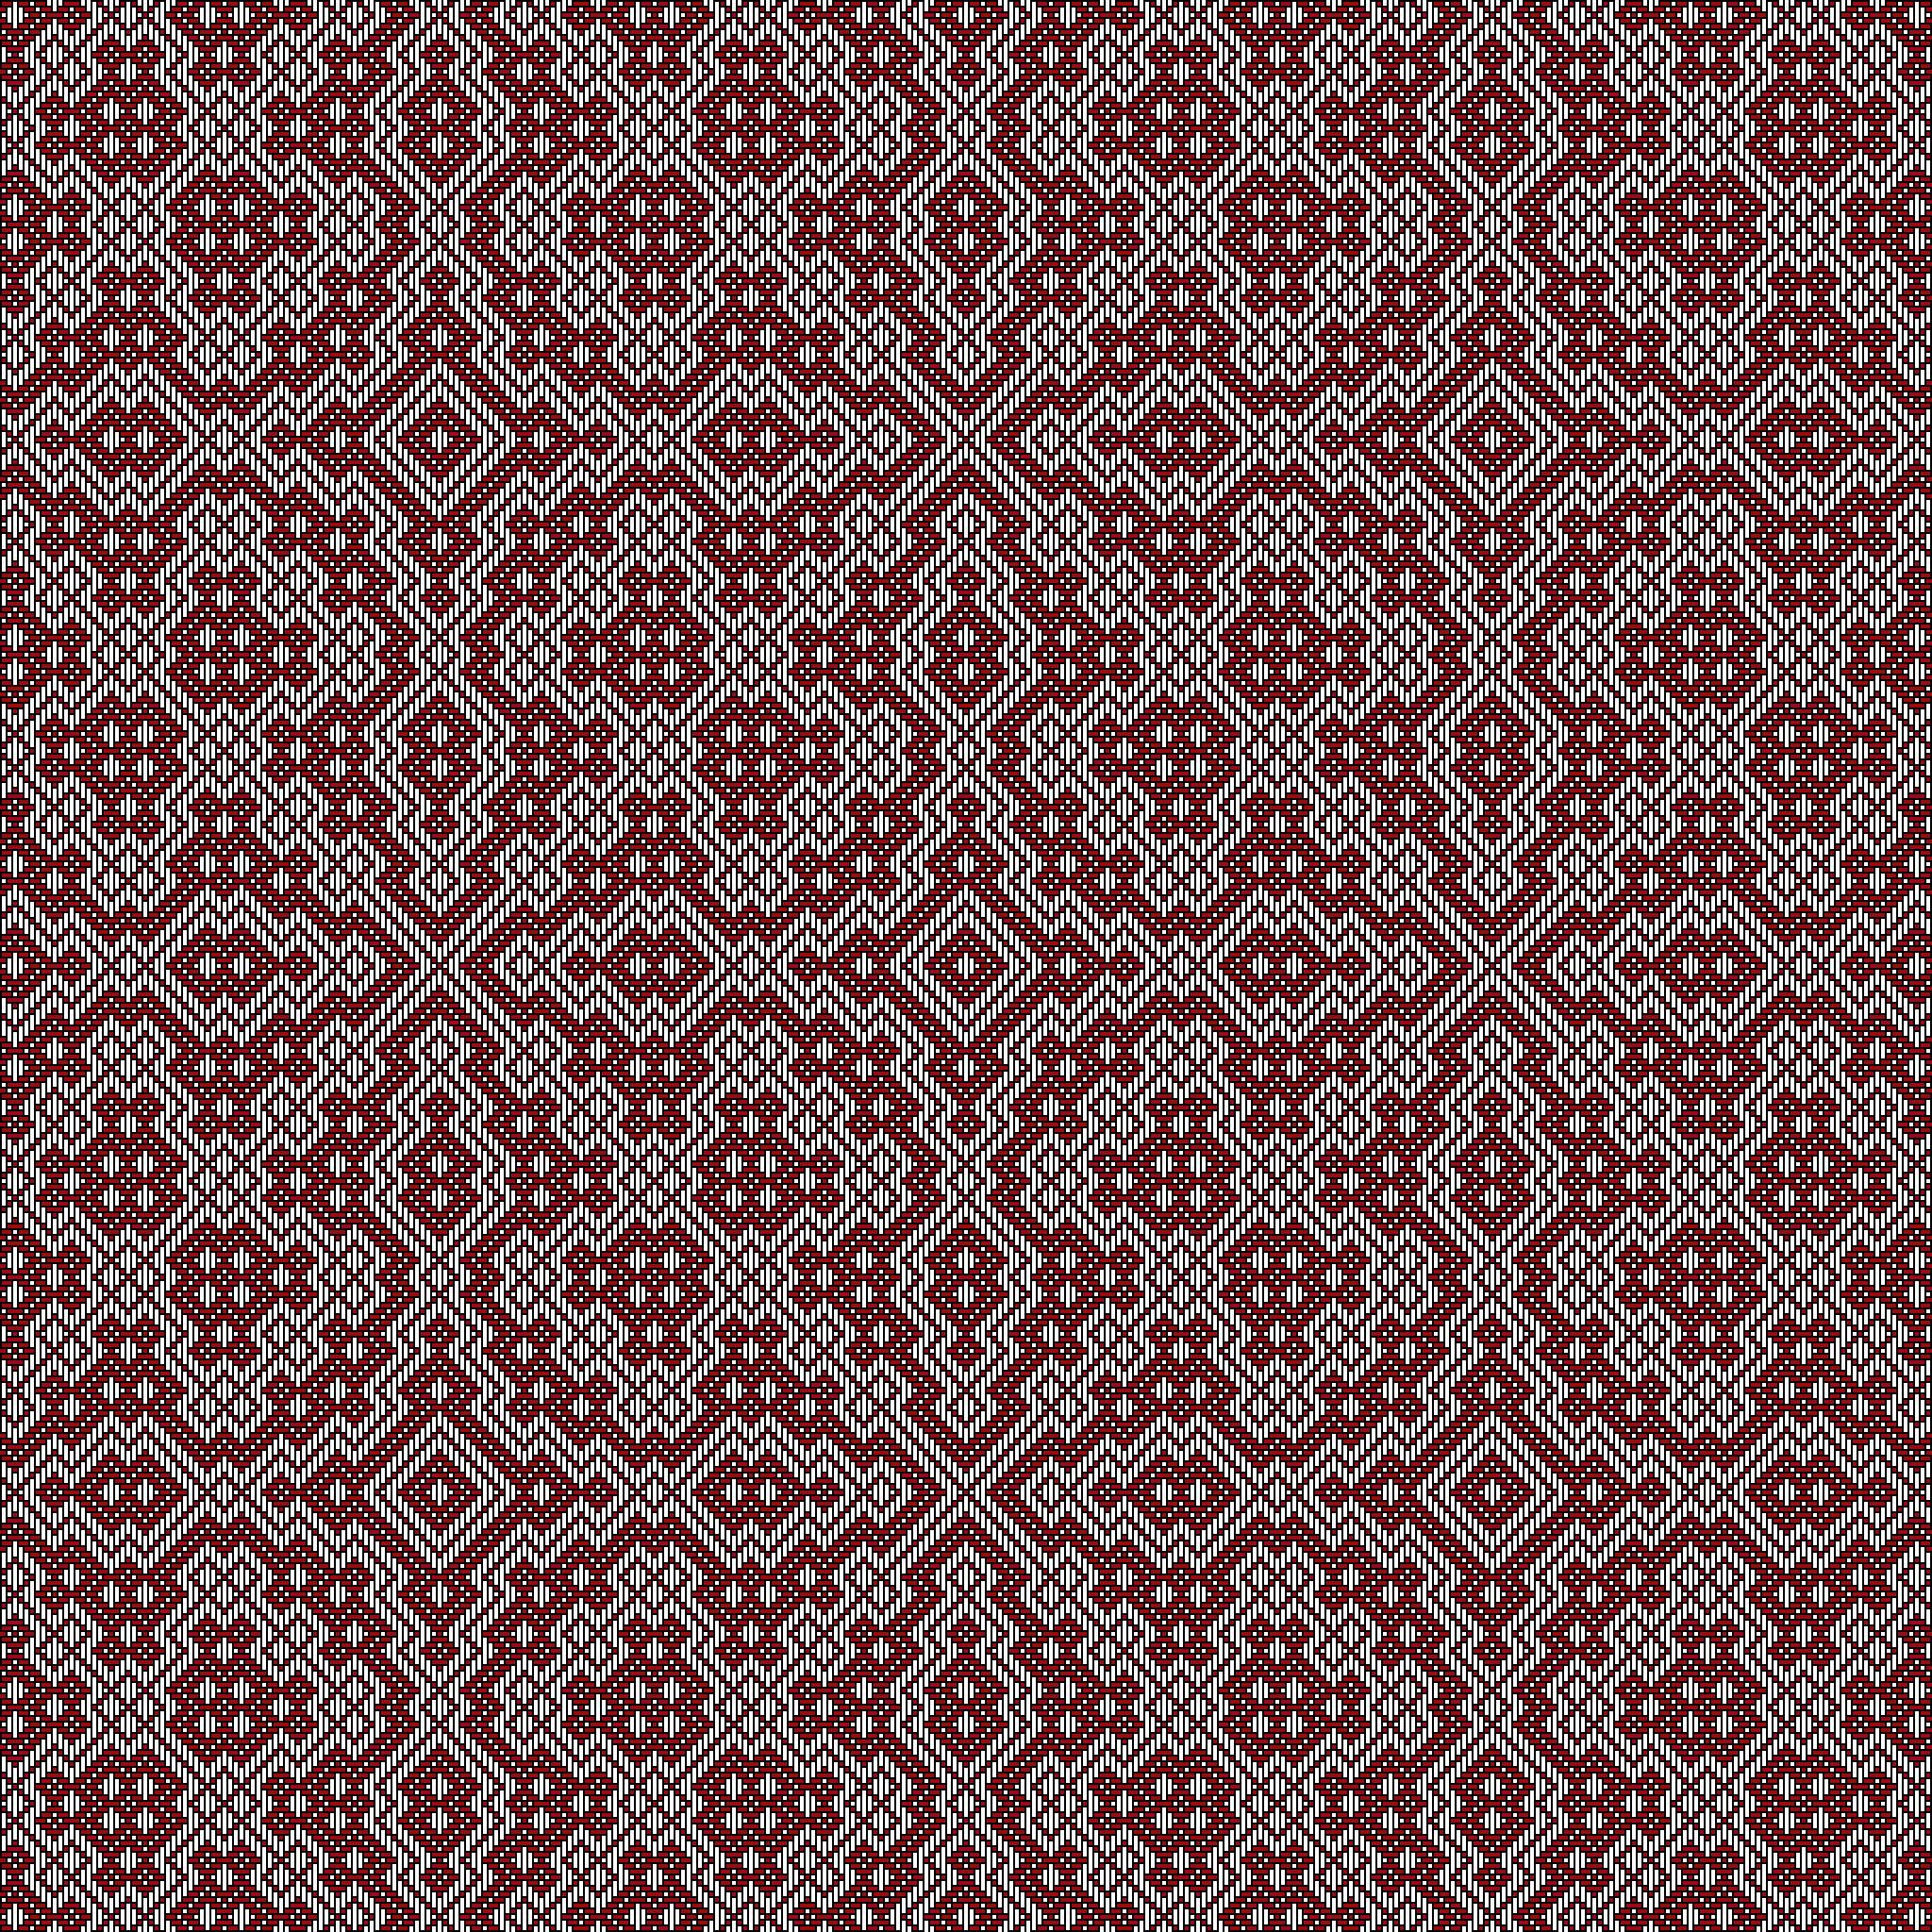 Background Carpet Weaving Simple Pattern iPhone HD Wallpaper Free